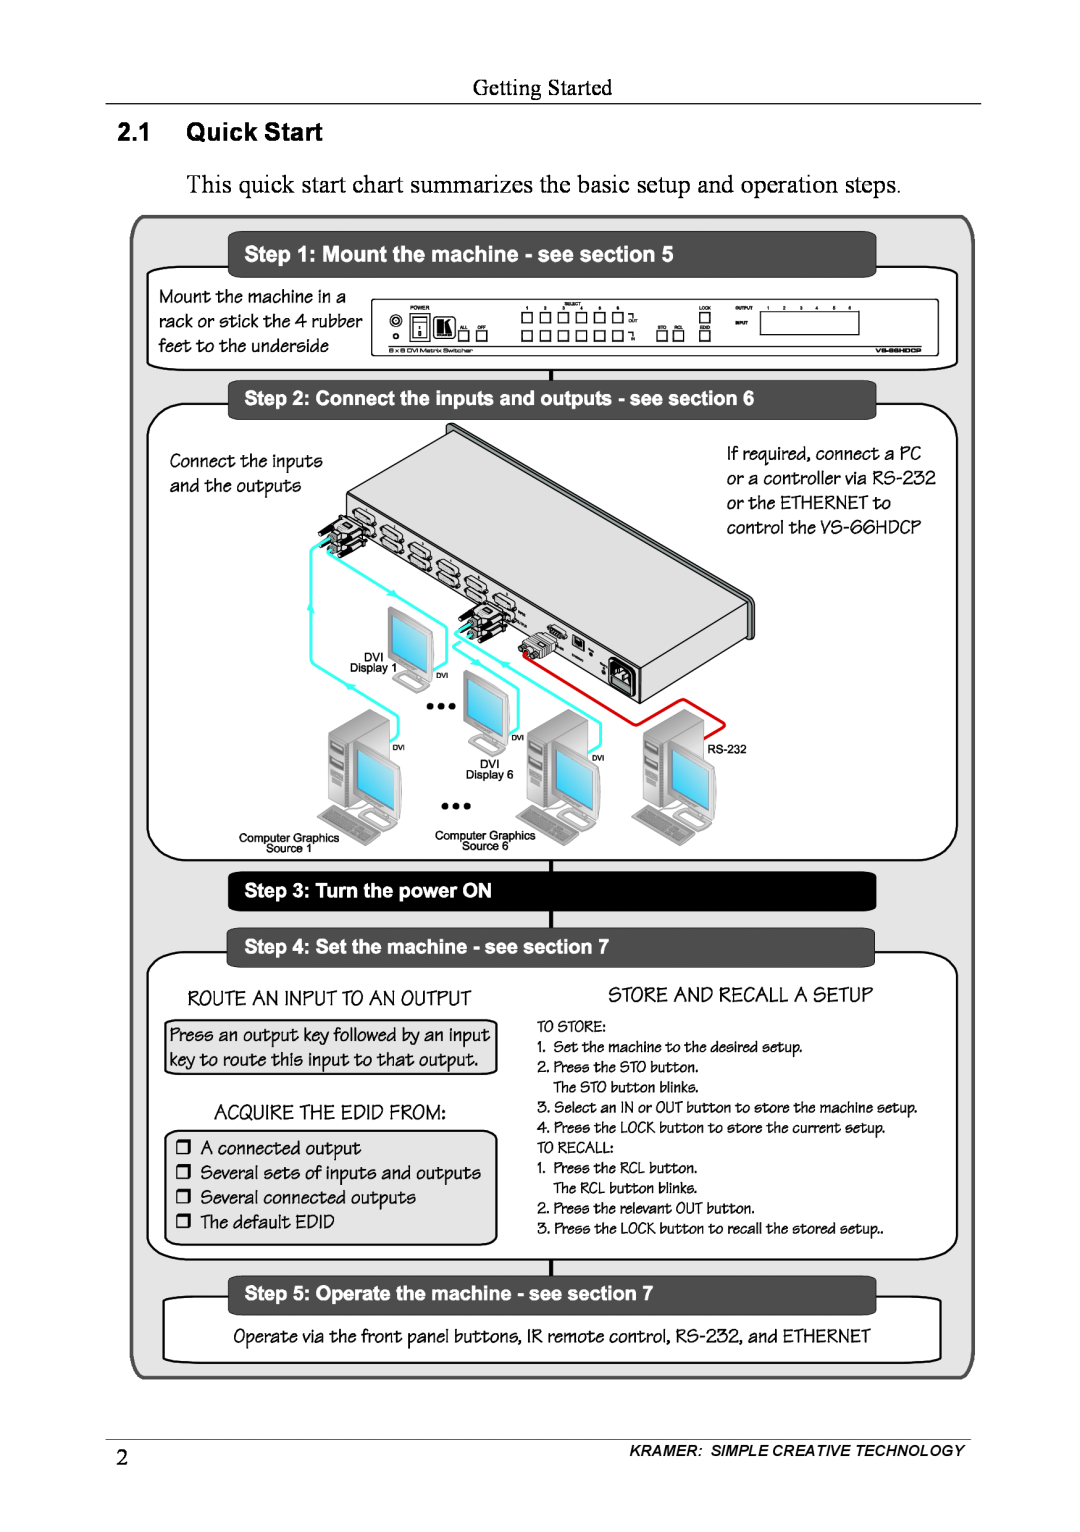 Kramer Electronics VS-66hdcp user manual Quick Start, This quick start chart summarizes the basic setup and operation steps 